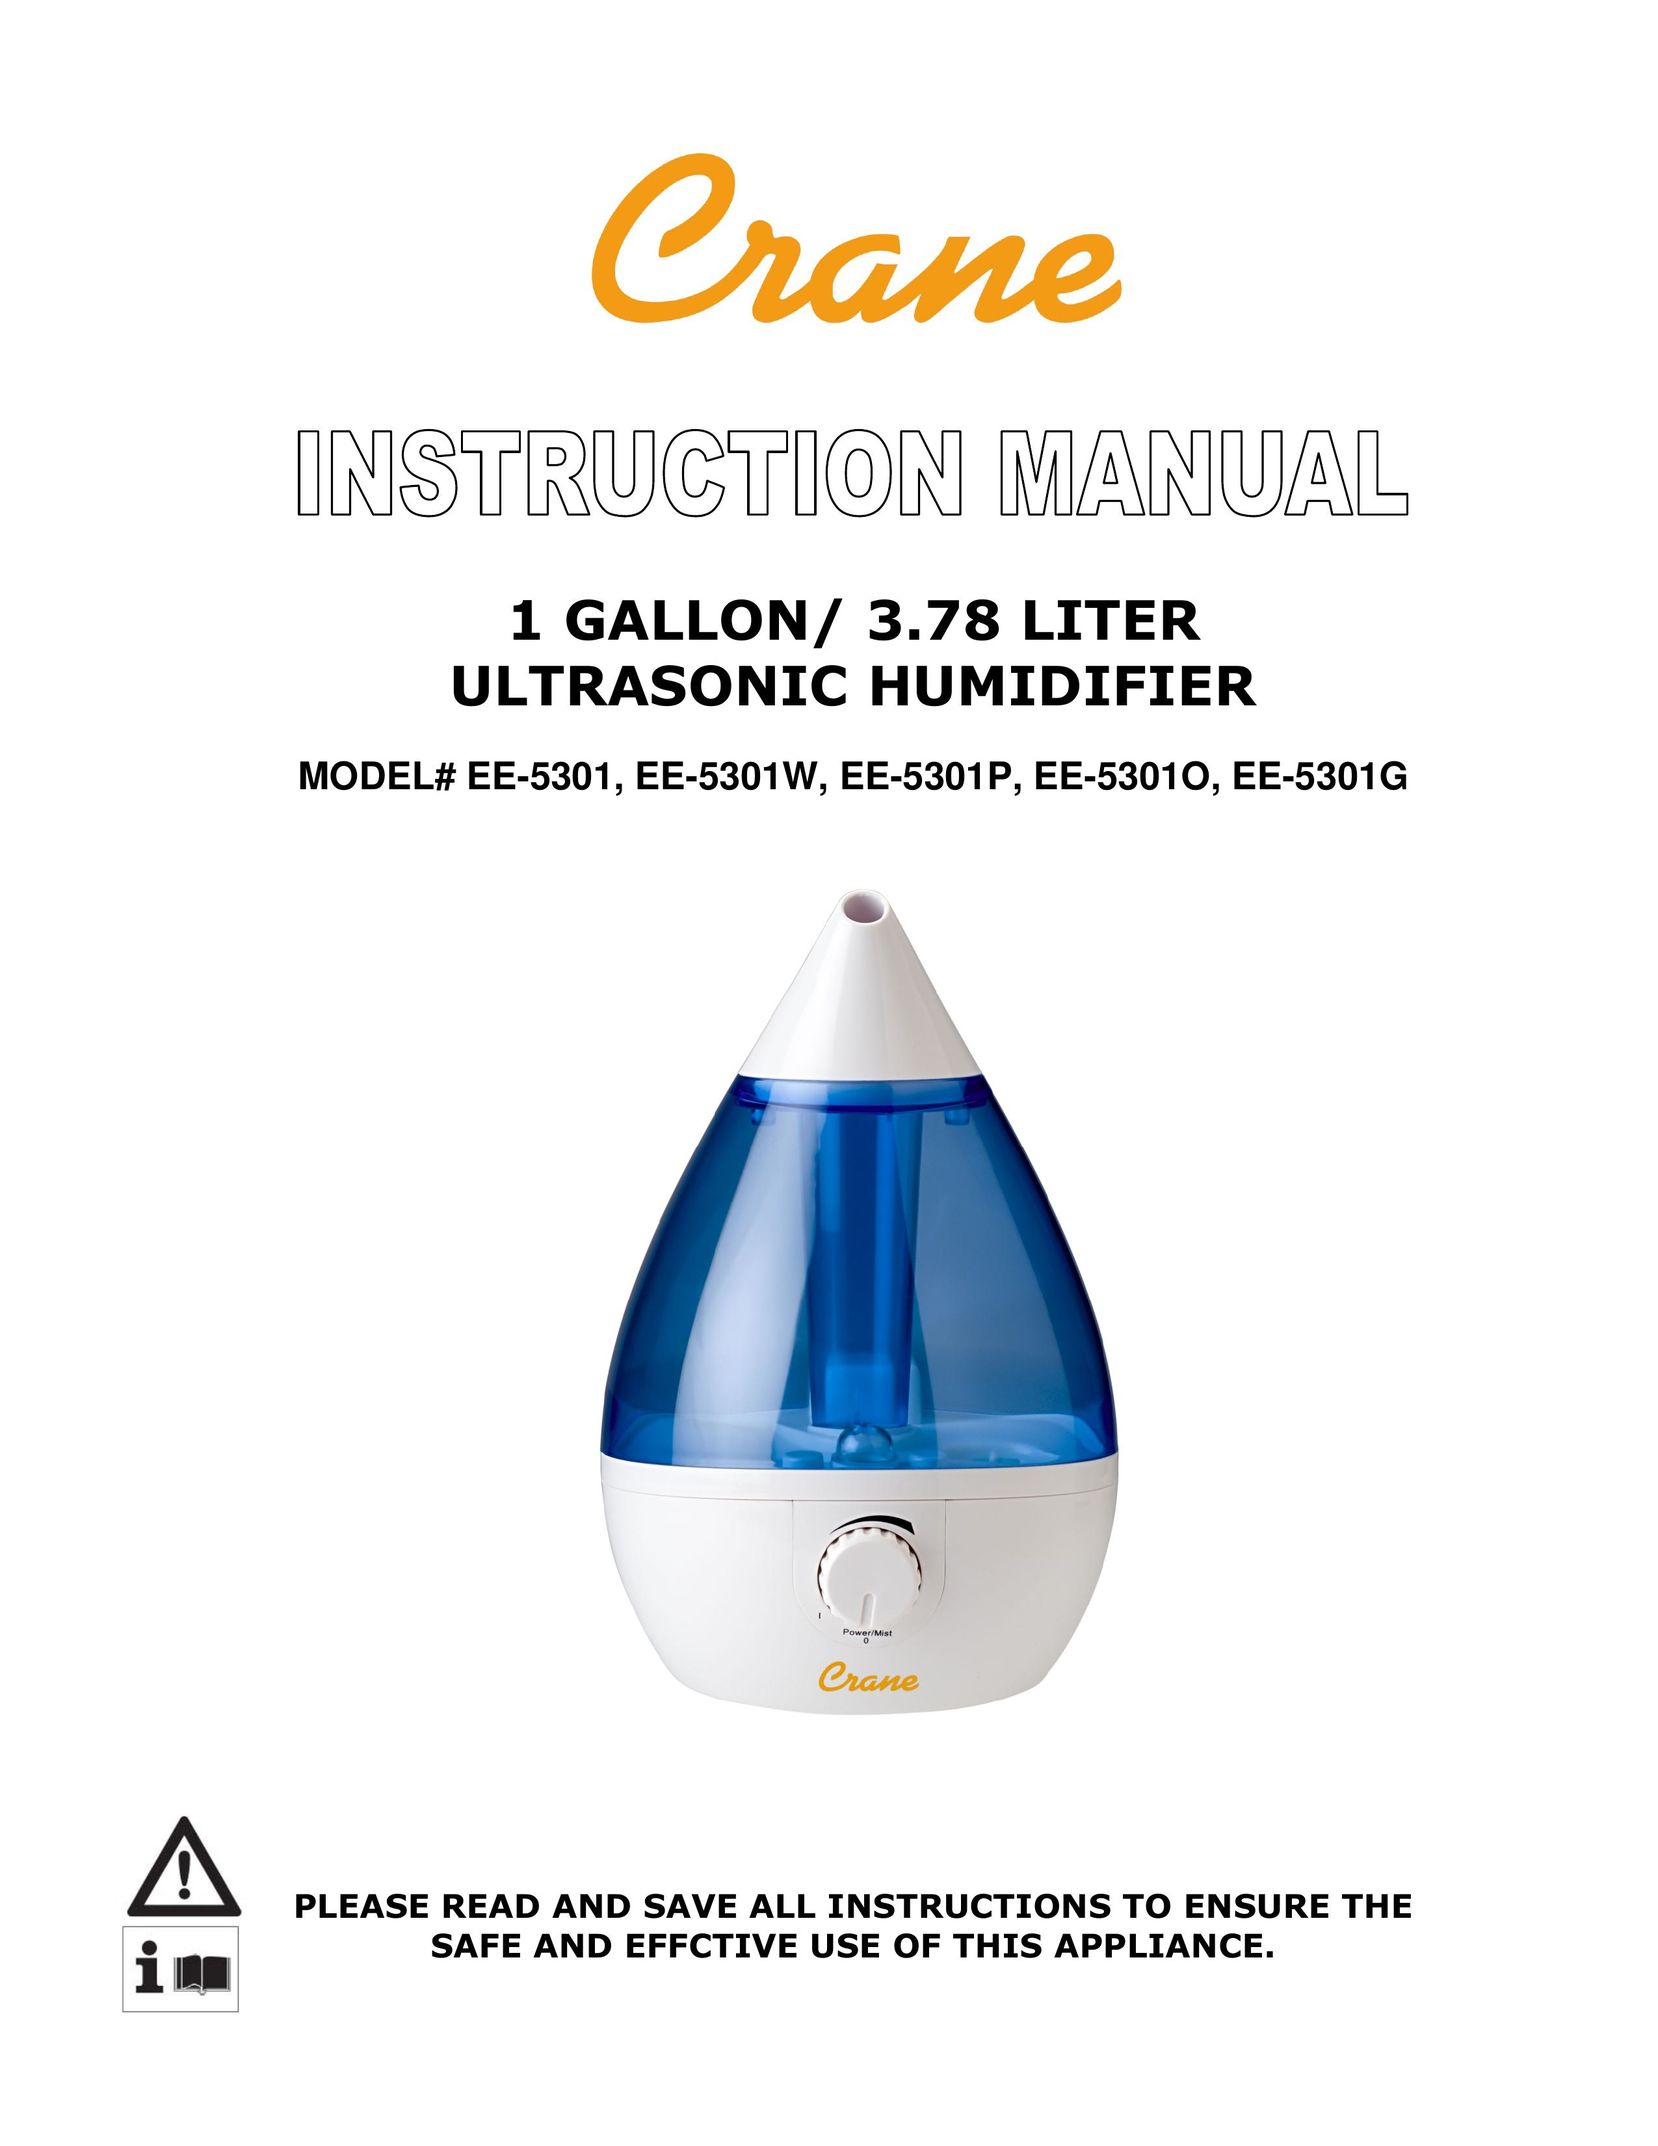 Crane EE-5301W Humidifier User Manual